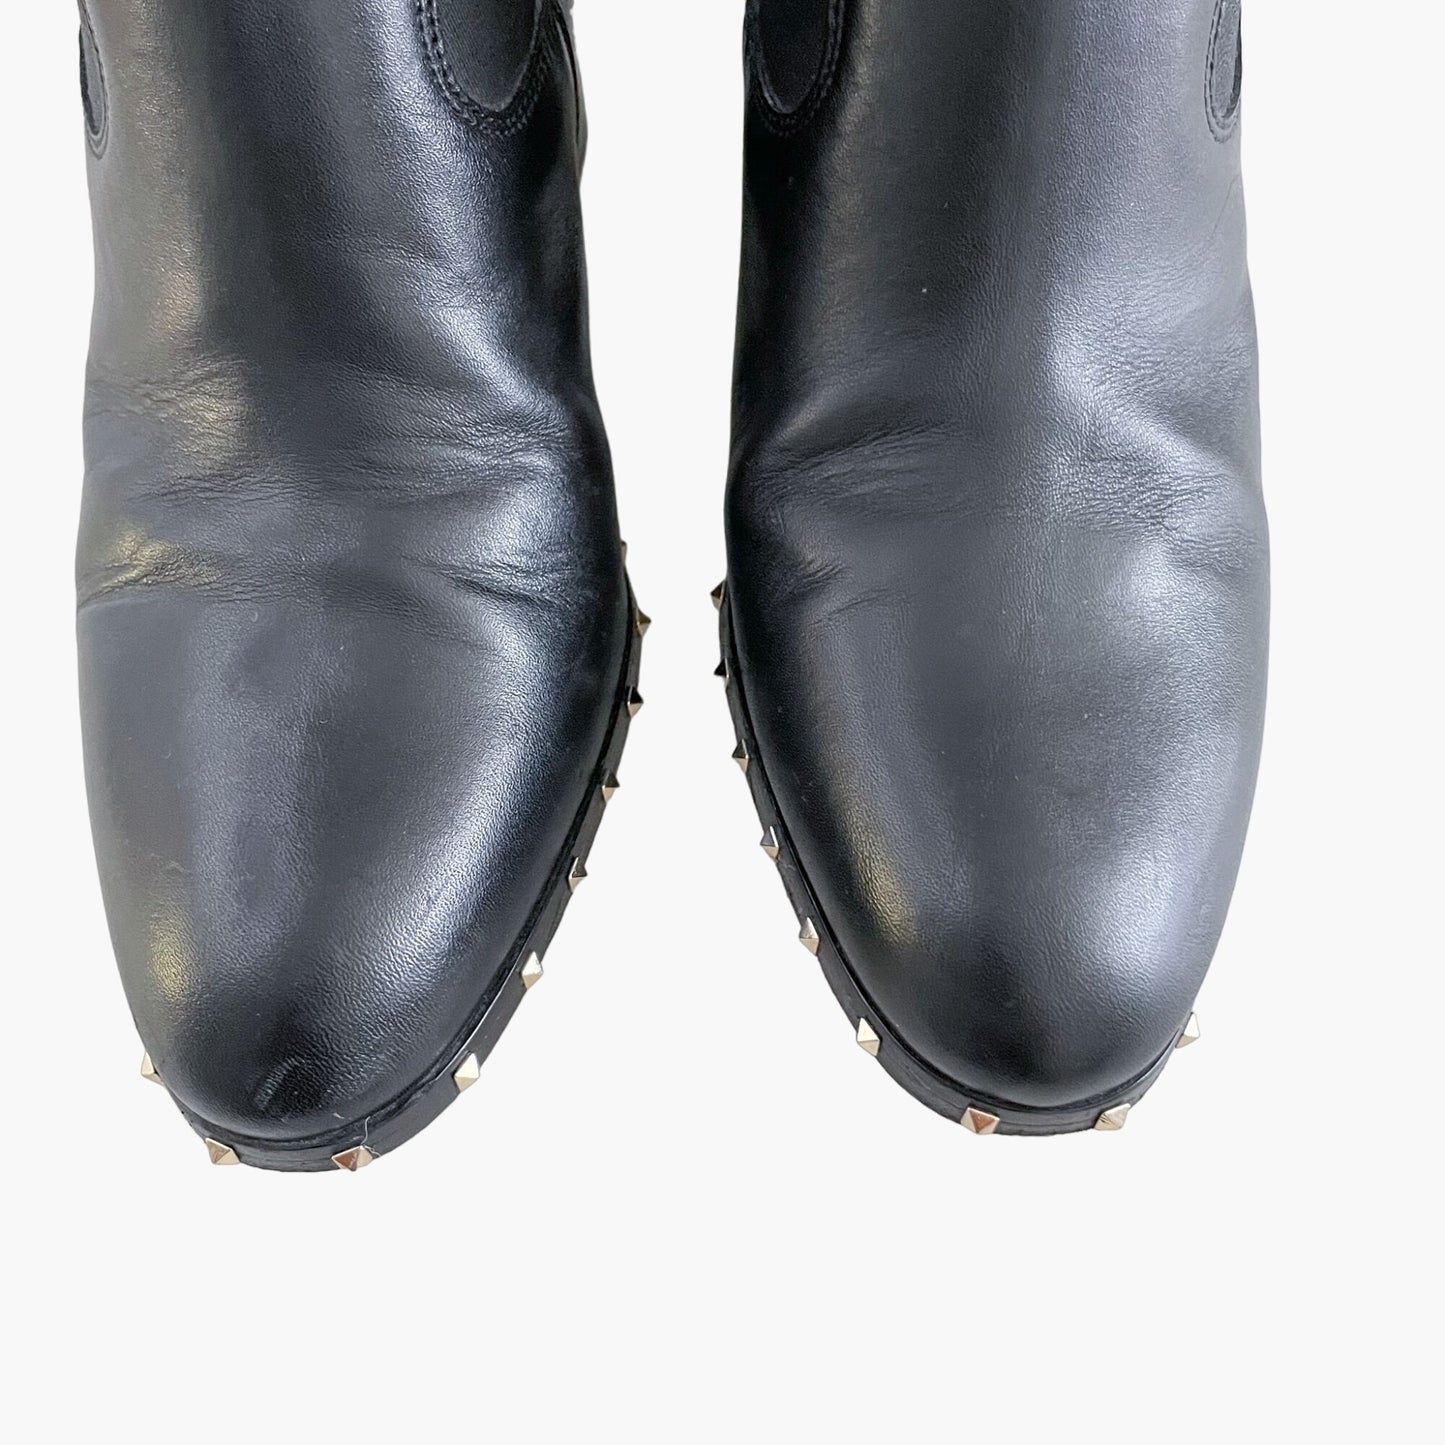 Valentino Garavani Soul Rockstud Chelsea Boot in Black Leather Size 37.5